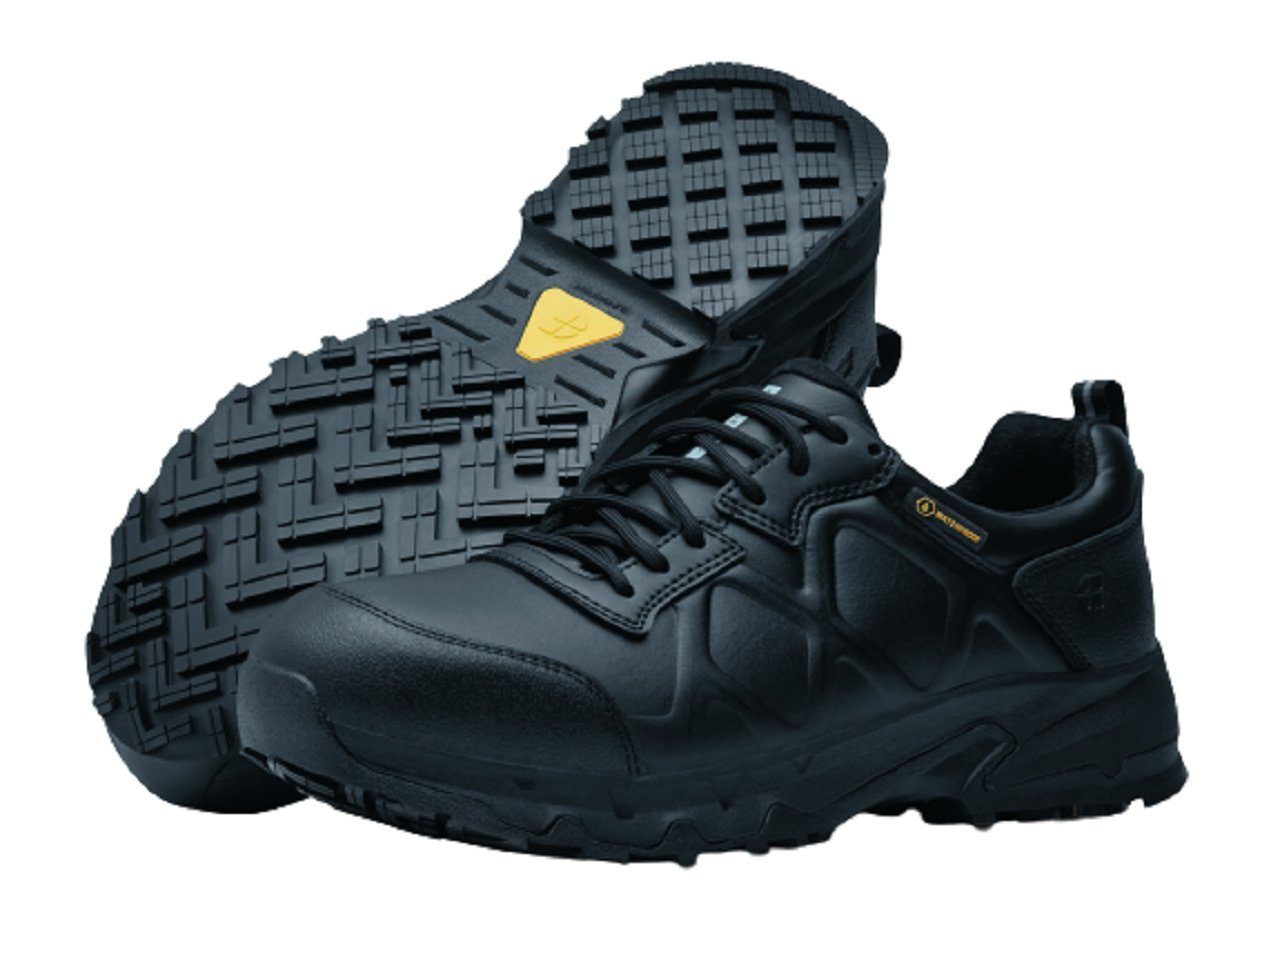 O2 HI ESD, For SRC Callan Hiker-Schuhe Low CI Sicherheitsschuh Crews schwarz, wasserdicht Shoes